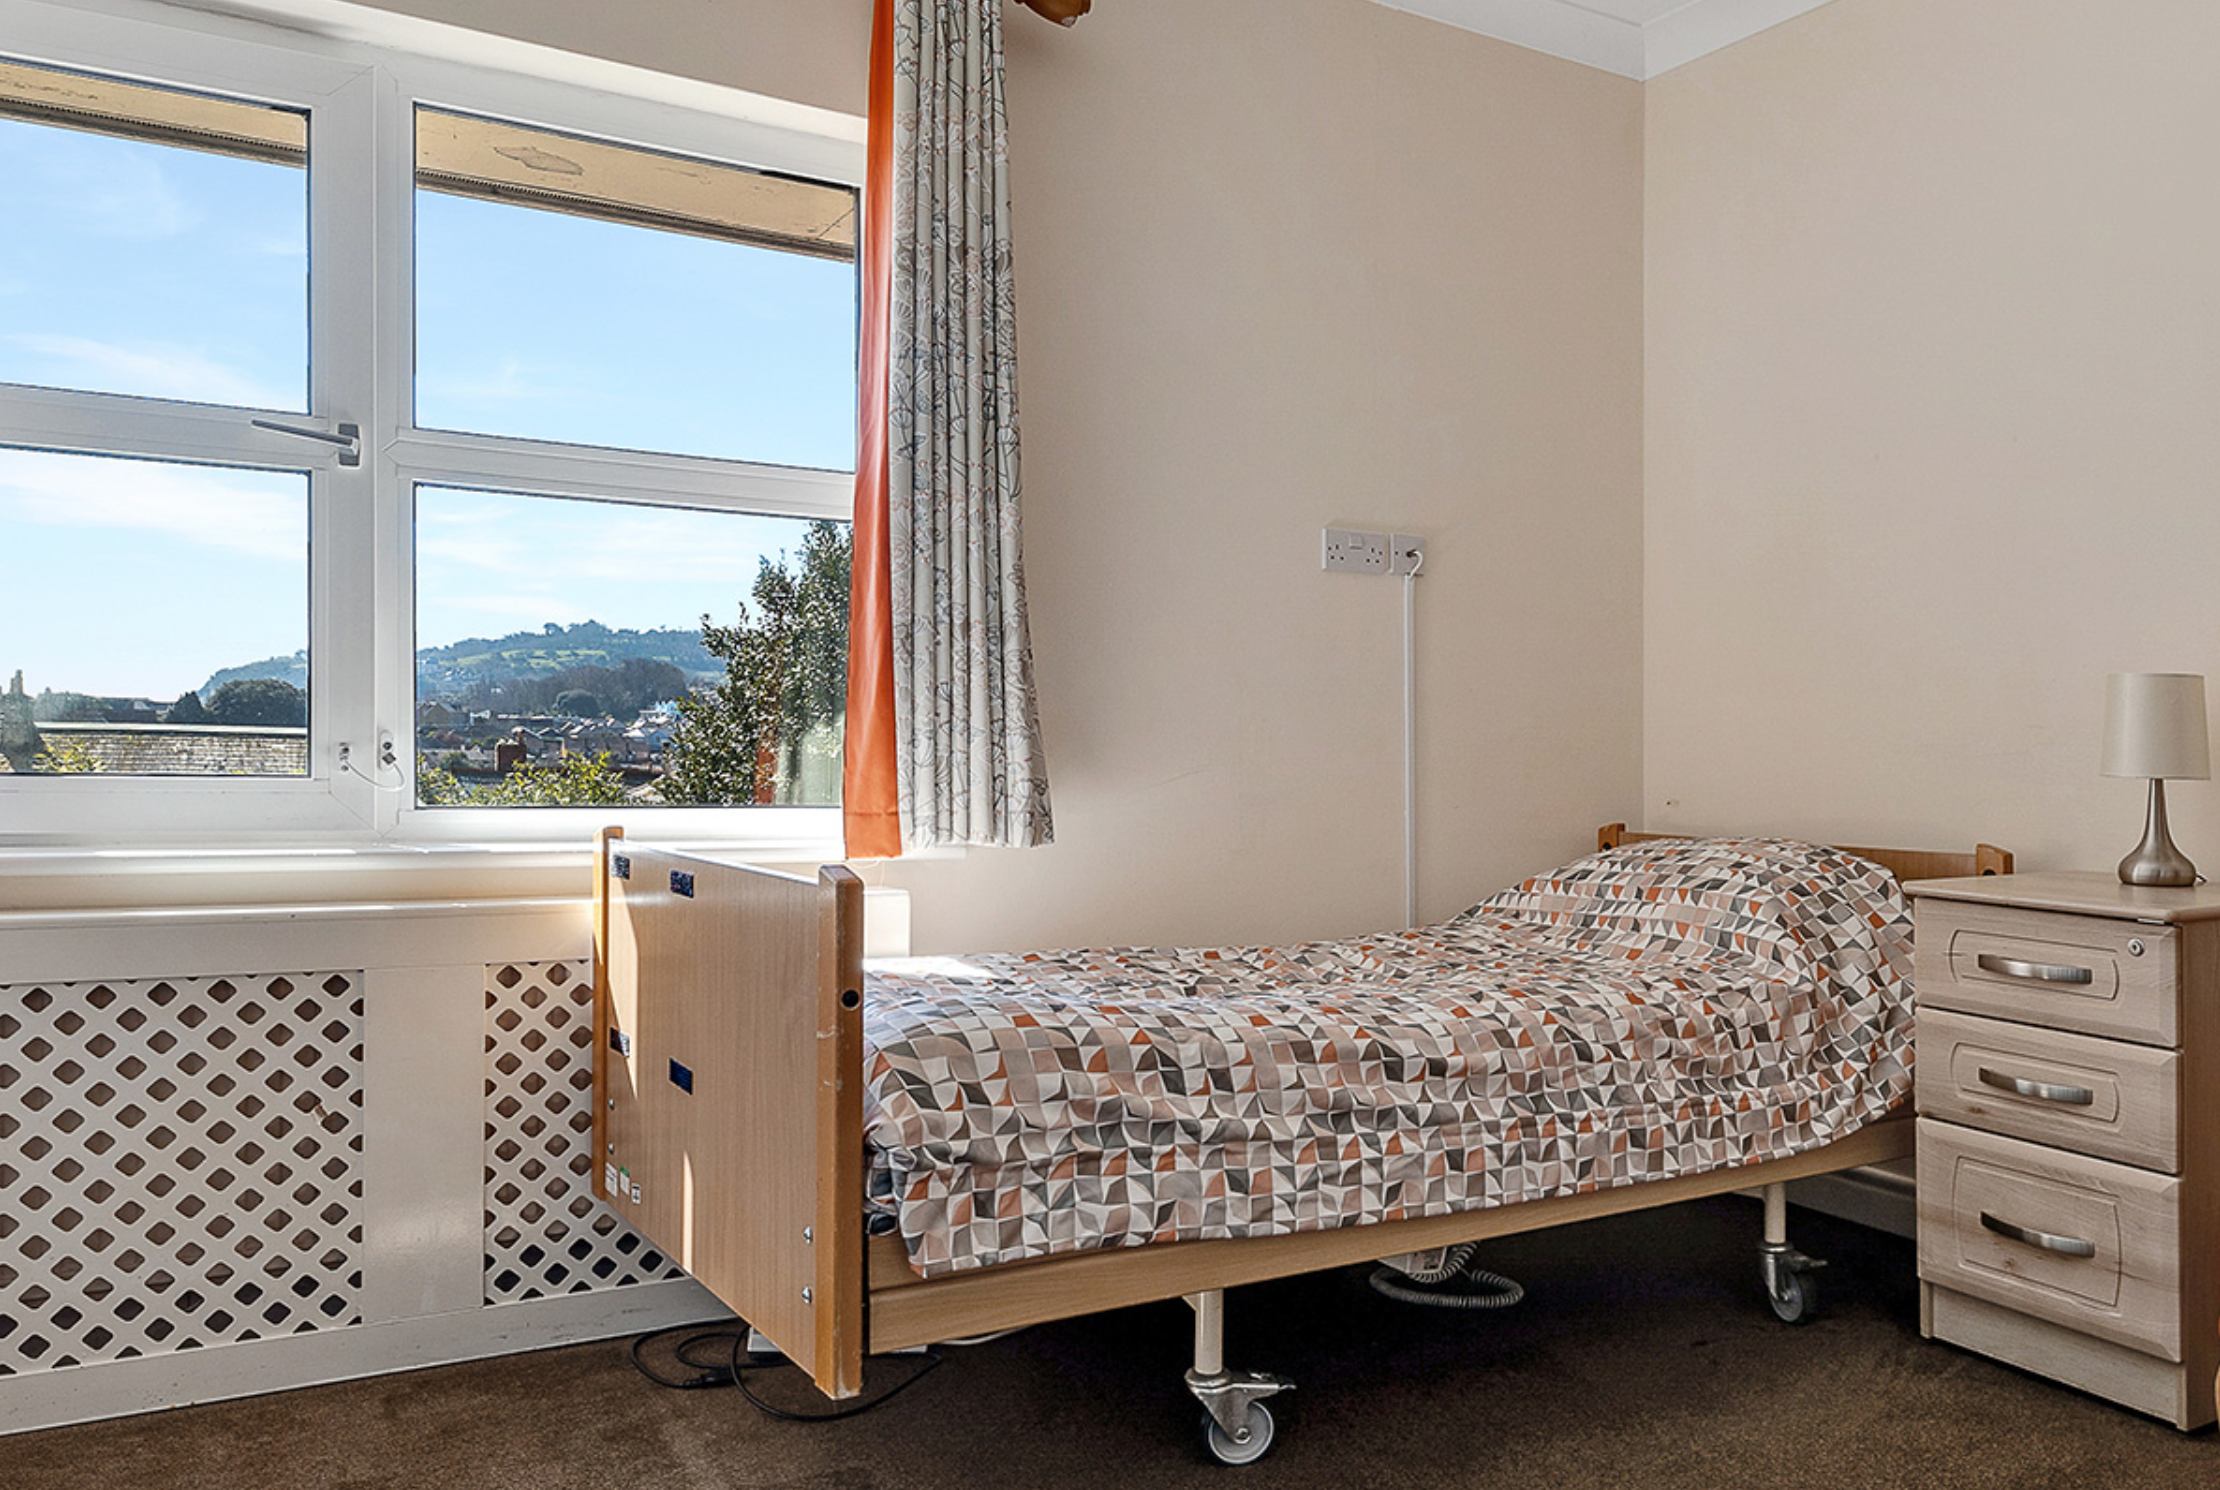 Bedroom of Springfield nursing home in Shanklin, Isle of Wight